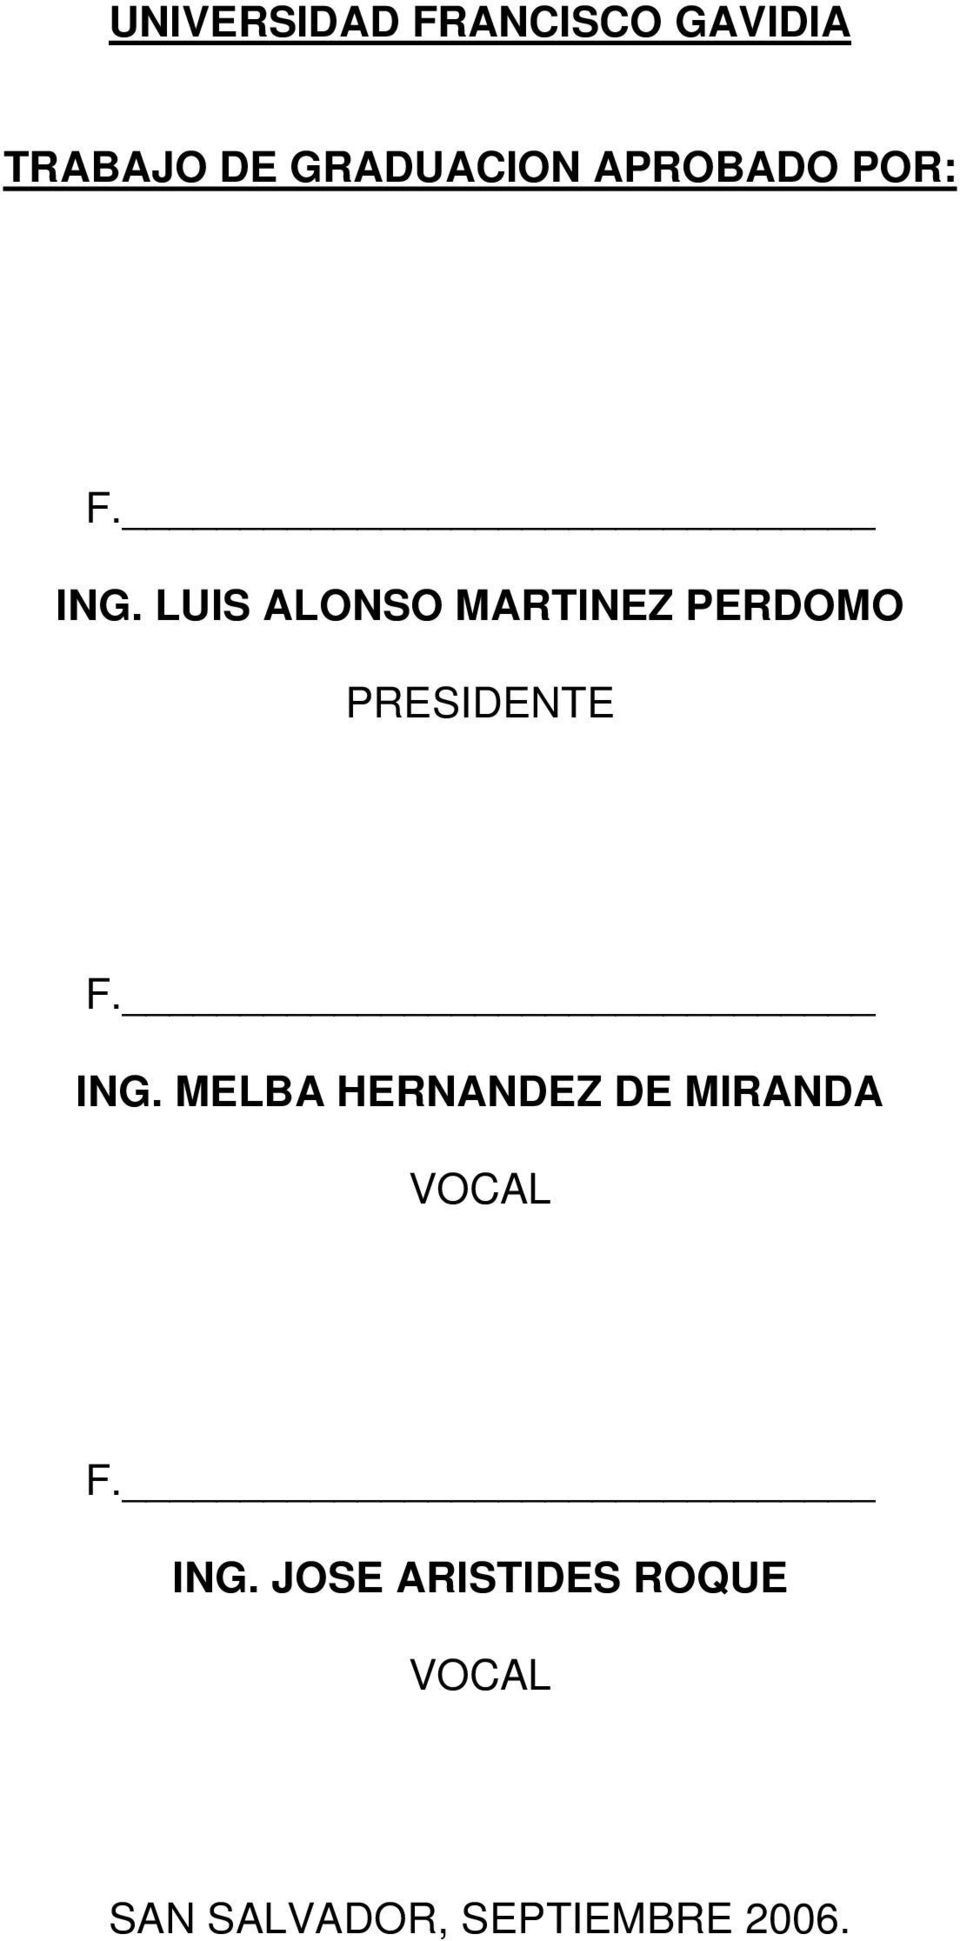 LUIS ALONSO MARTINEZ PERDOMO PRESIDENTE F. ING.